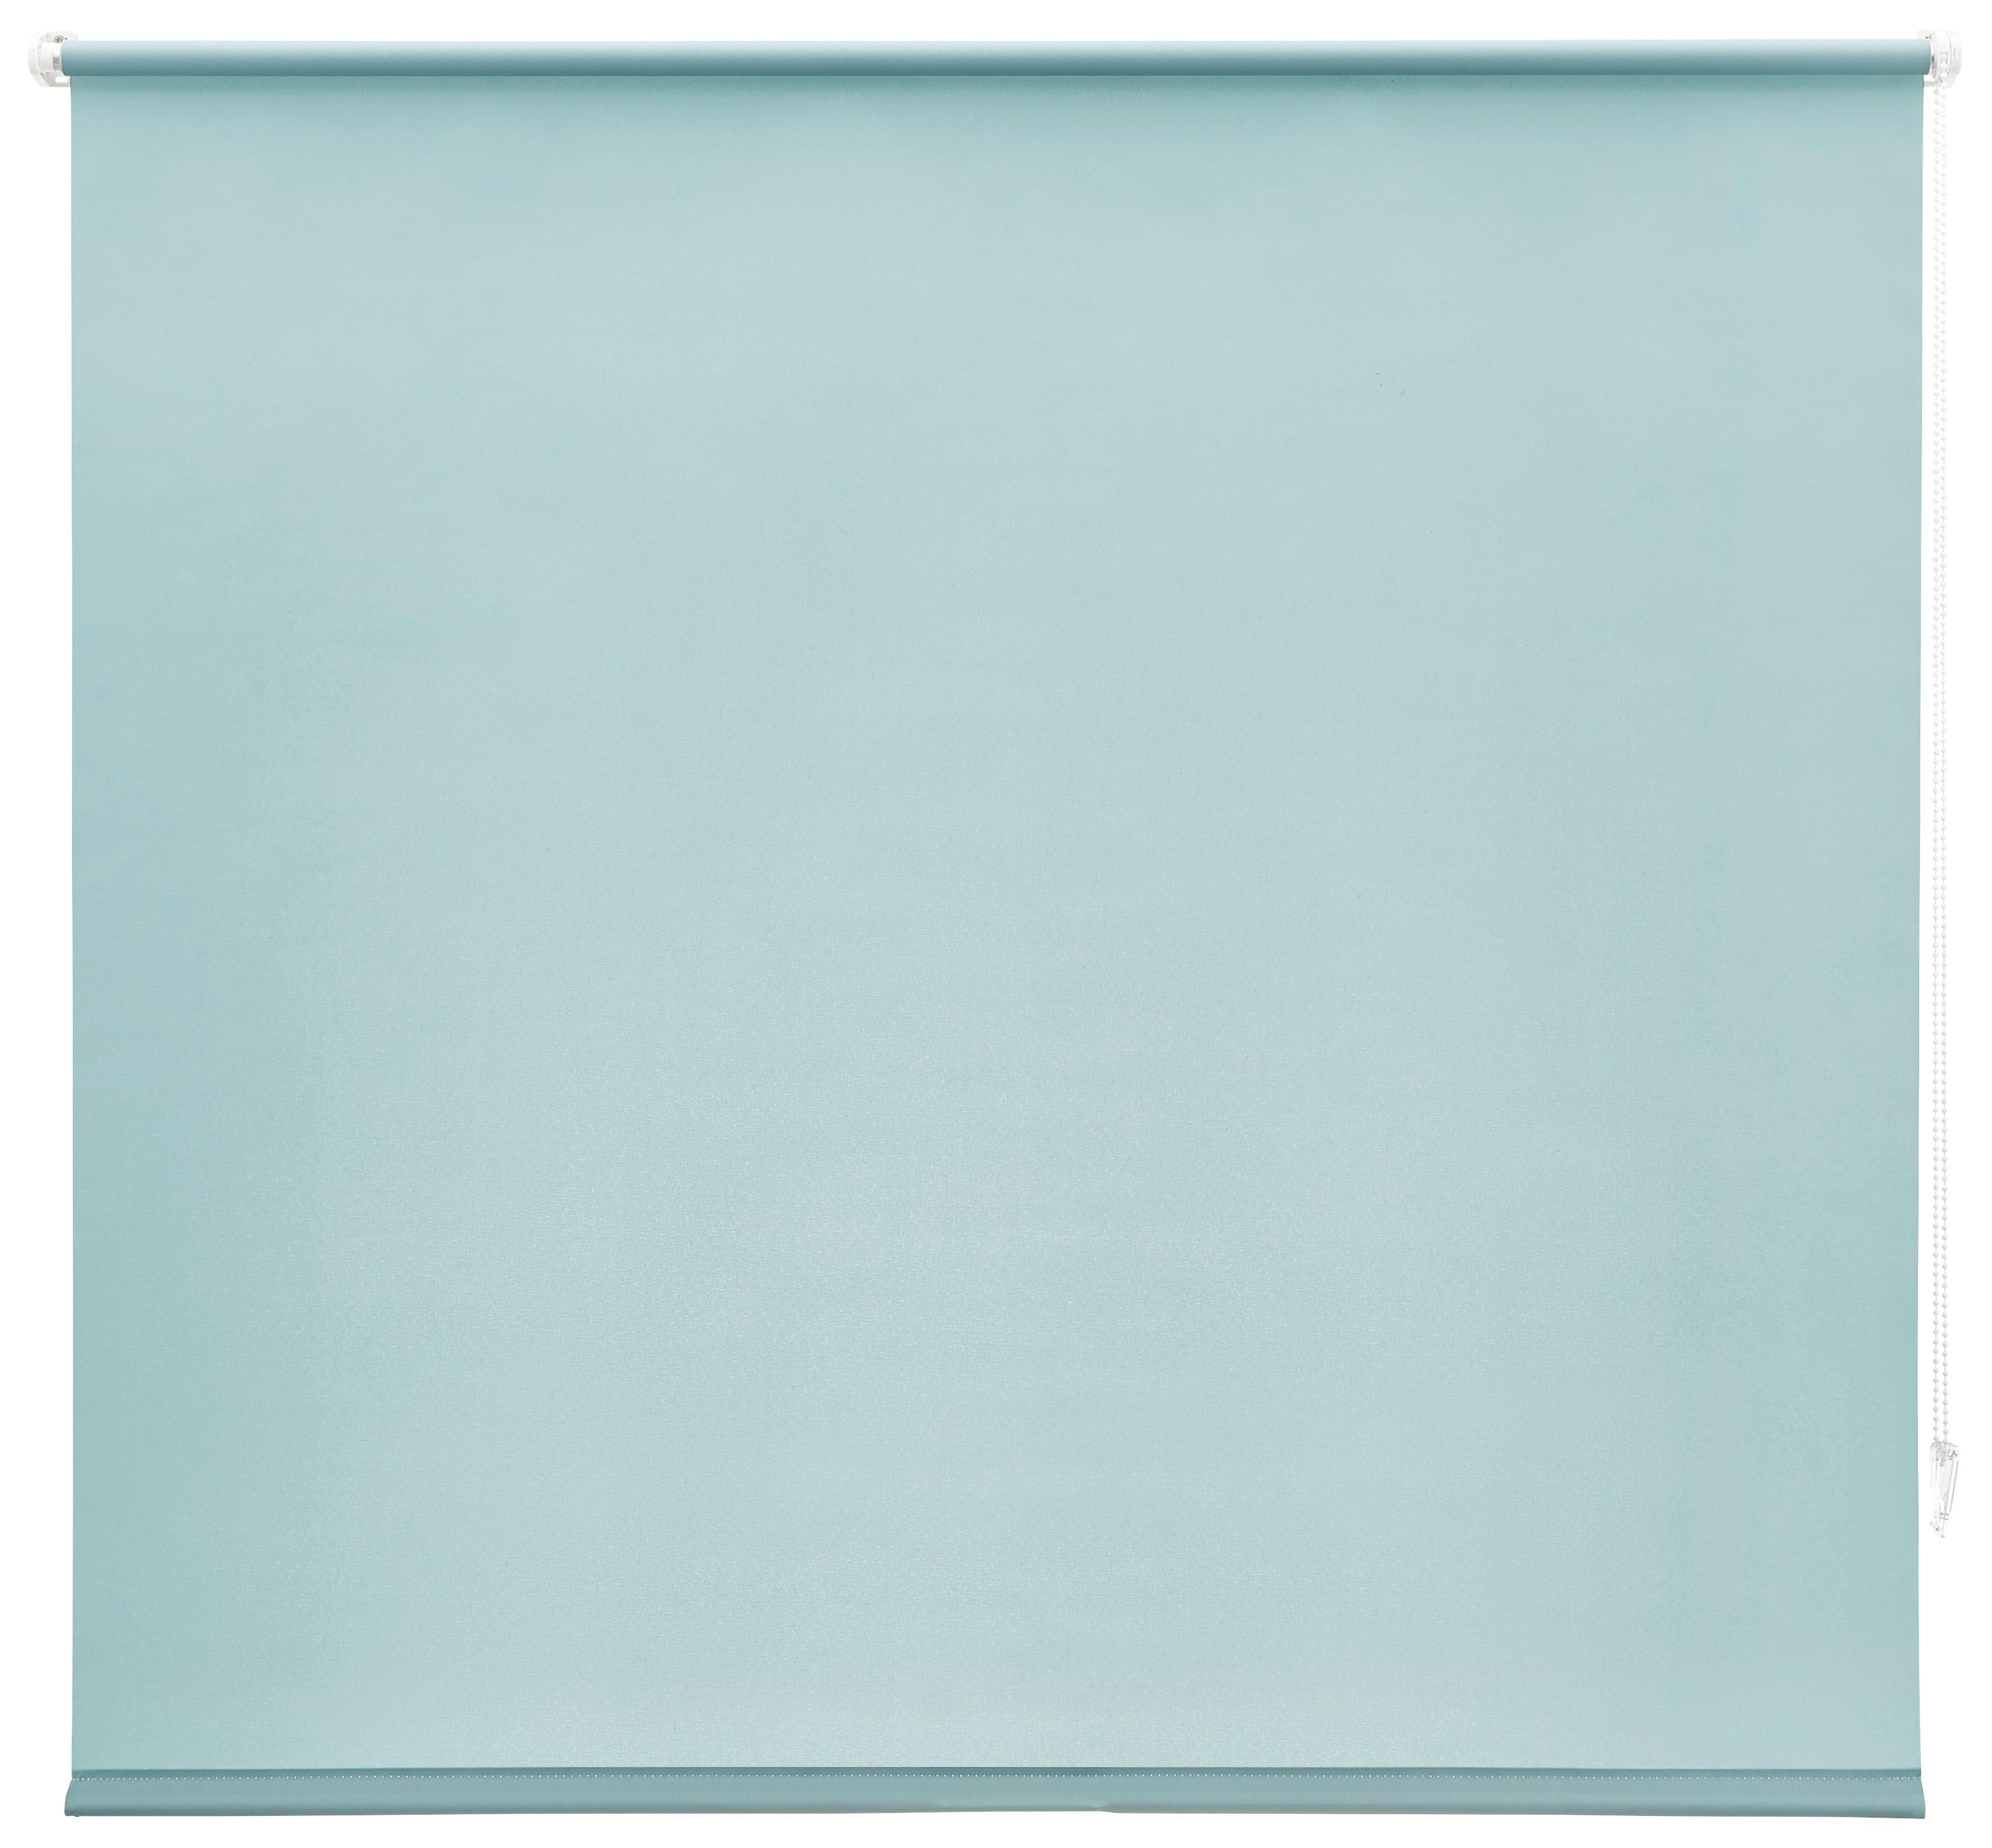 Klemmrollo Daylight in Jade ca. 120x150cm - Jadegrün, MODERN, Textil (120/150cm) - Modern Living